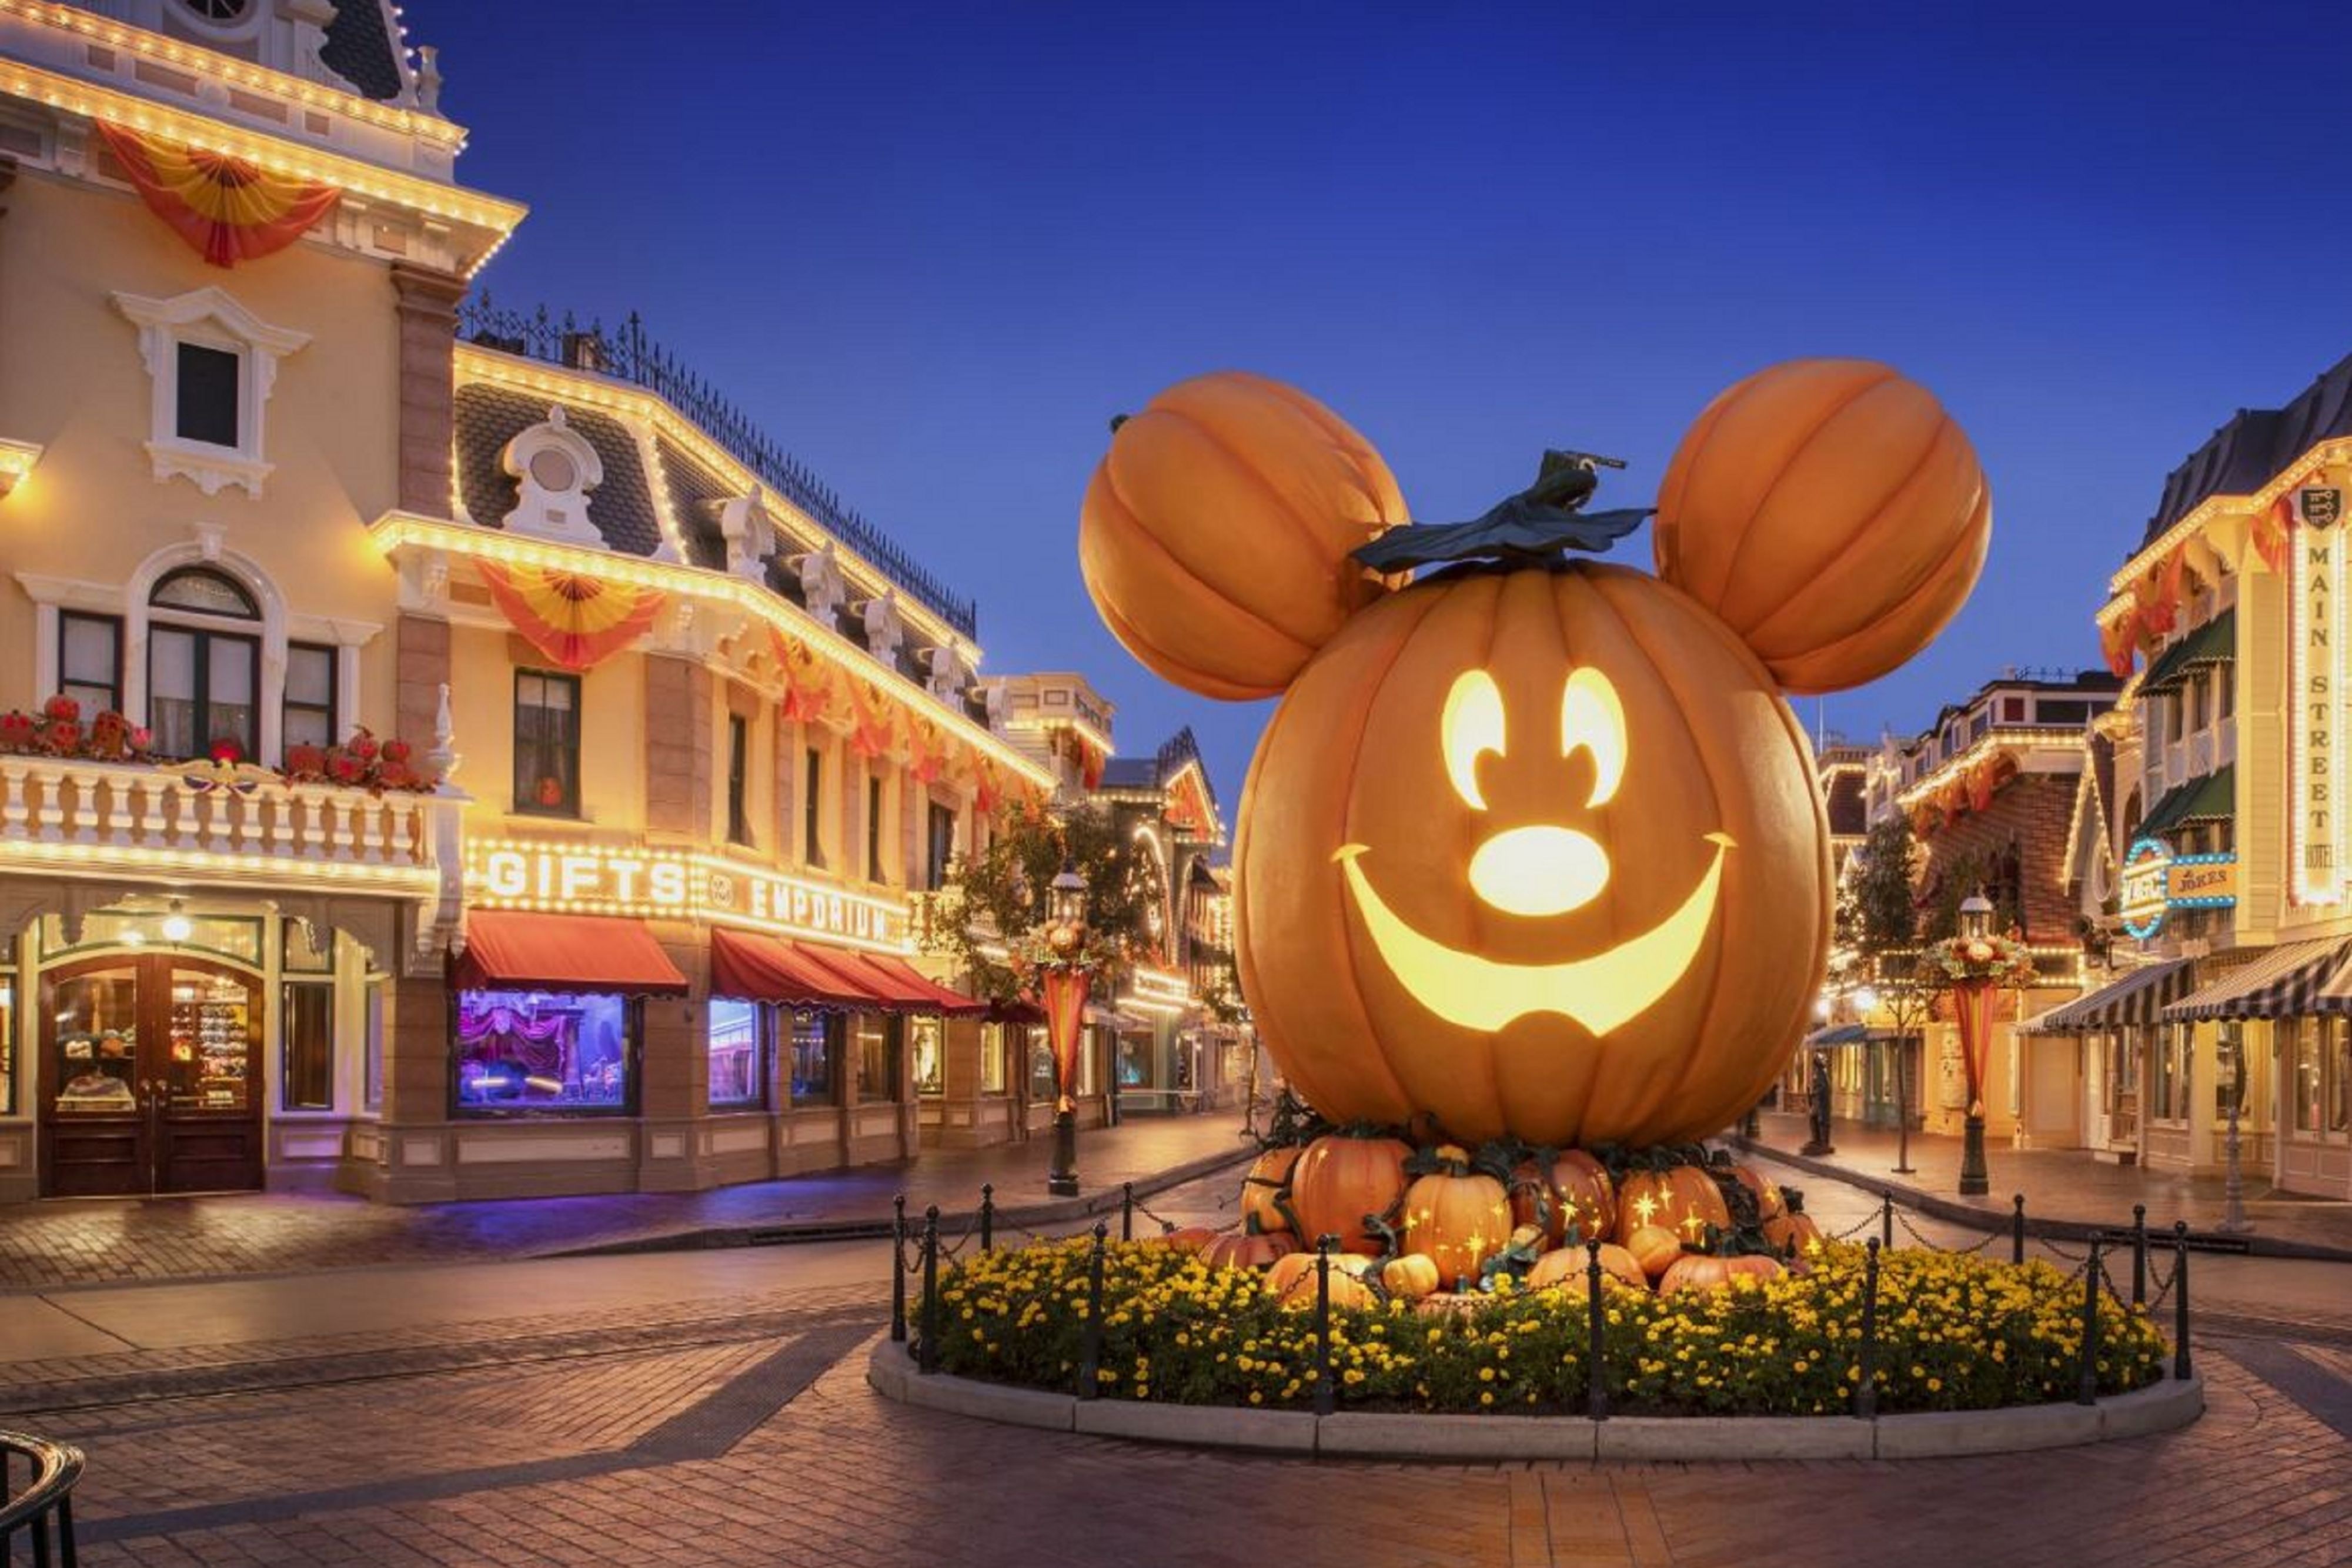 Disneyland Halloween decorations